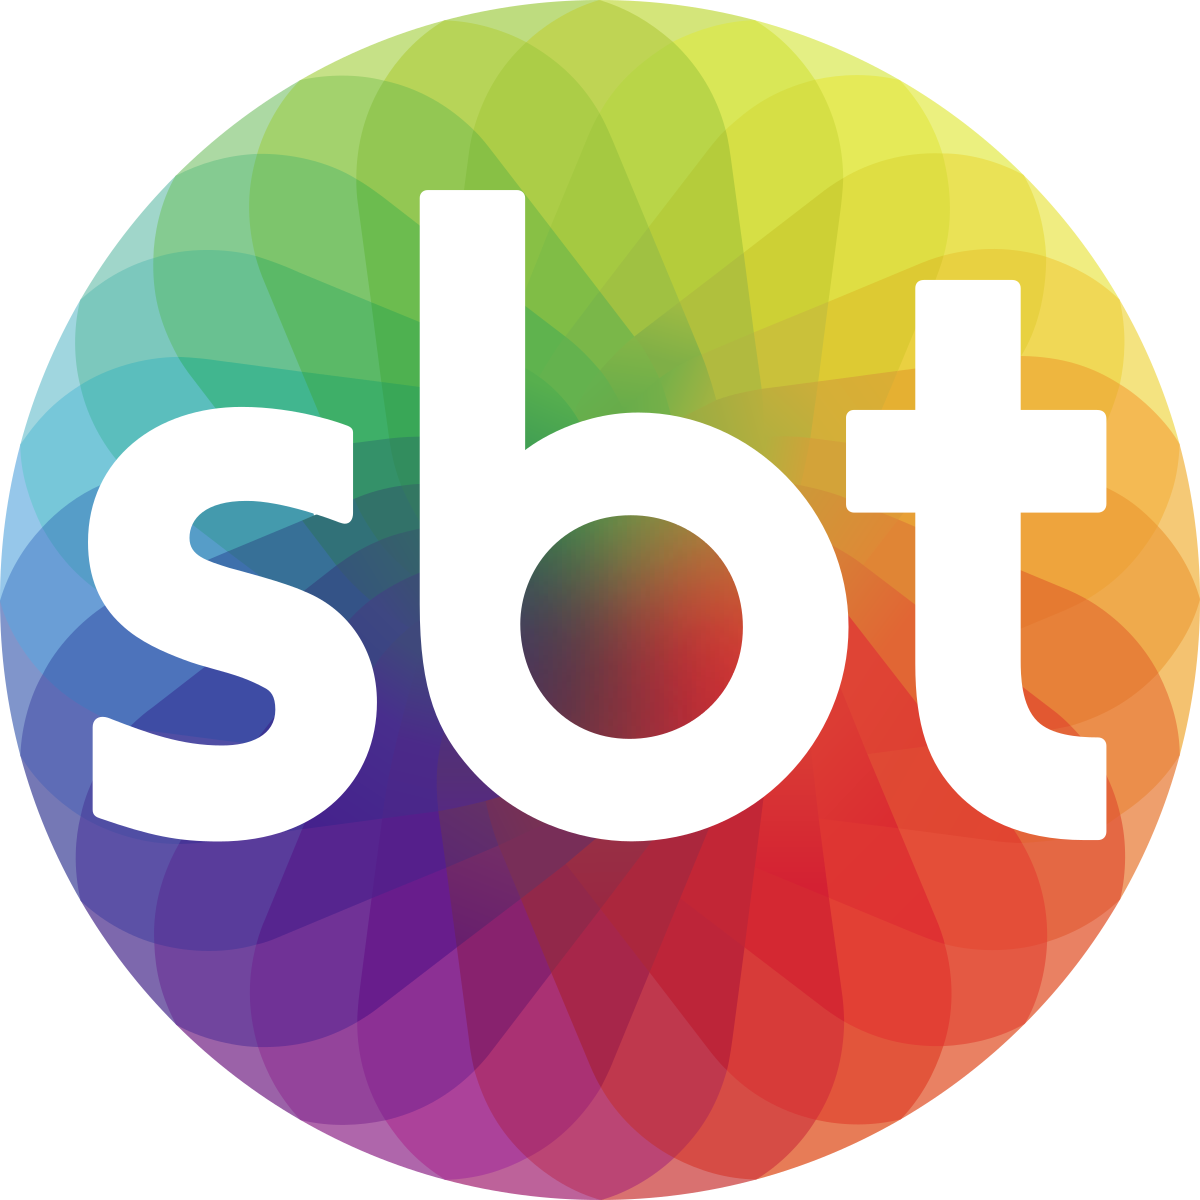 SBT - TV Alterosa - 19/02/2018